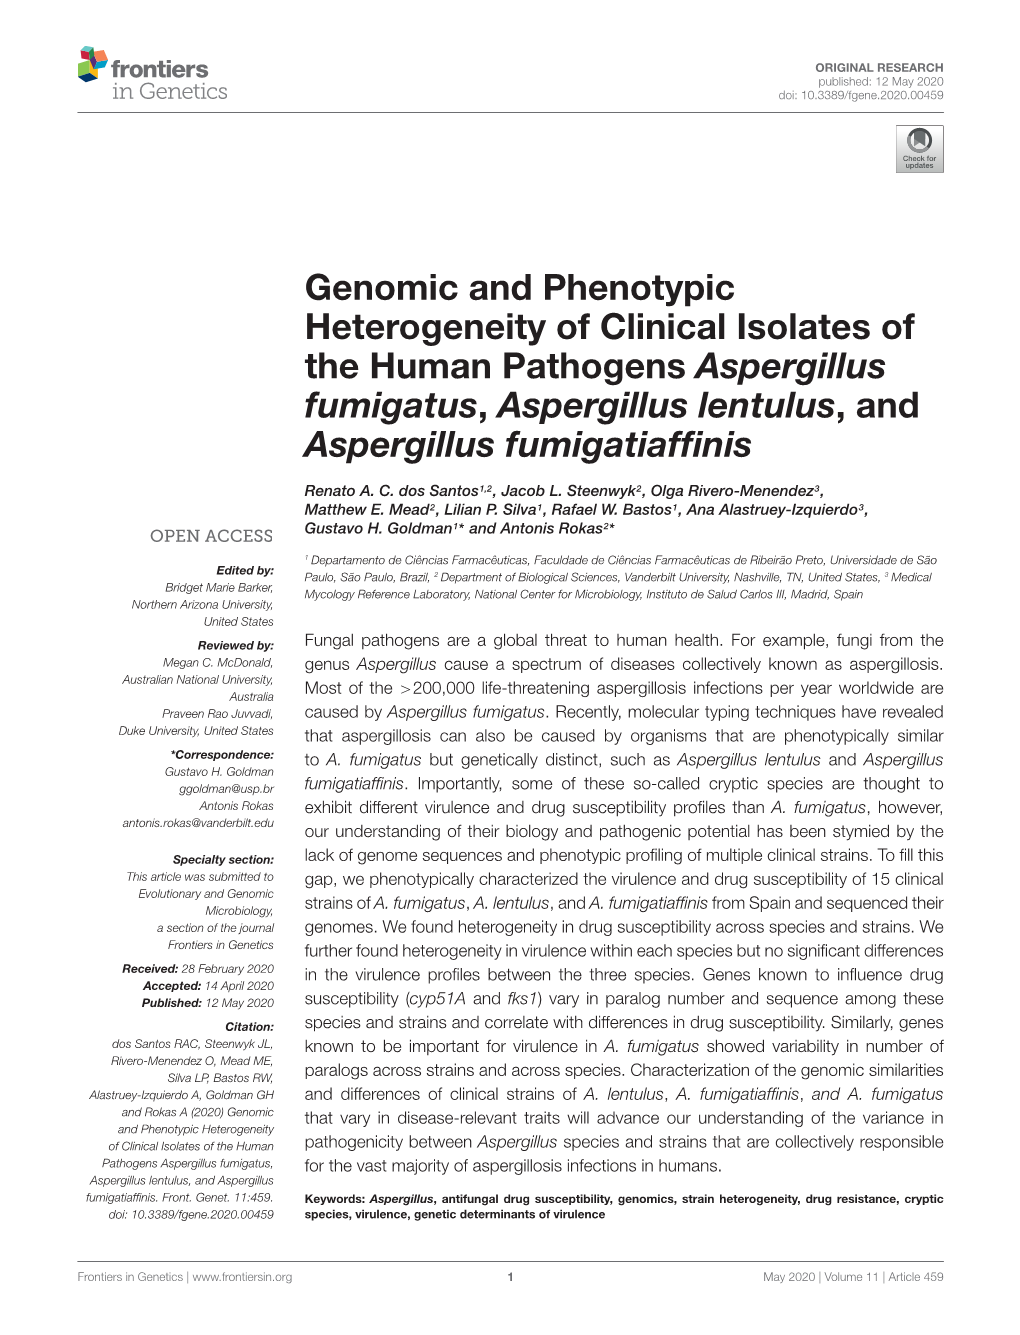 Genomic and Phenotypic Heterogeneity of Clinical Isolates of the Human Pathogens Aspergillus Fumigatus, Aspergillus Lentulus, and Aspergillus Fumigatiafﬁnis